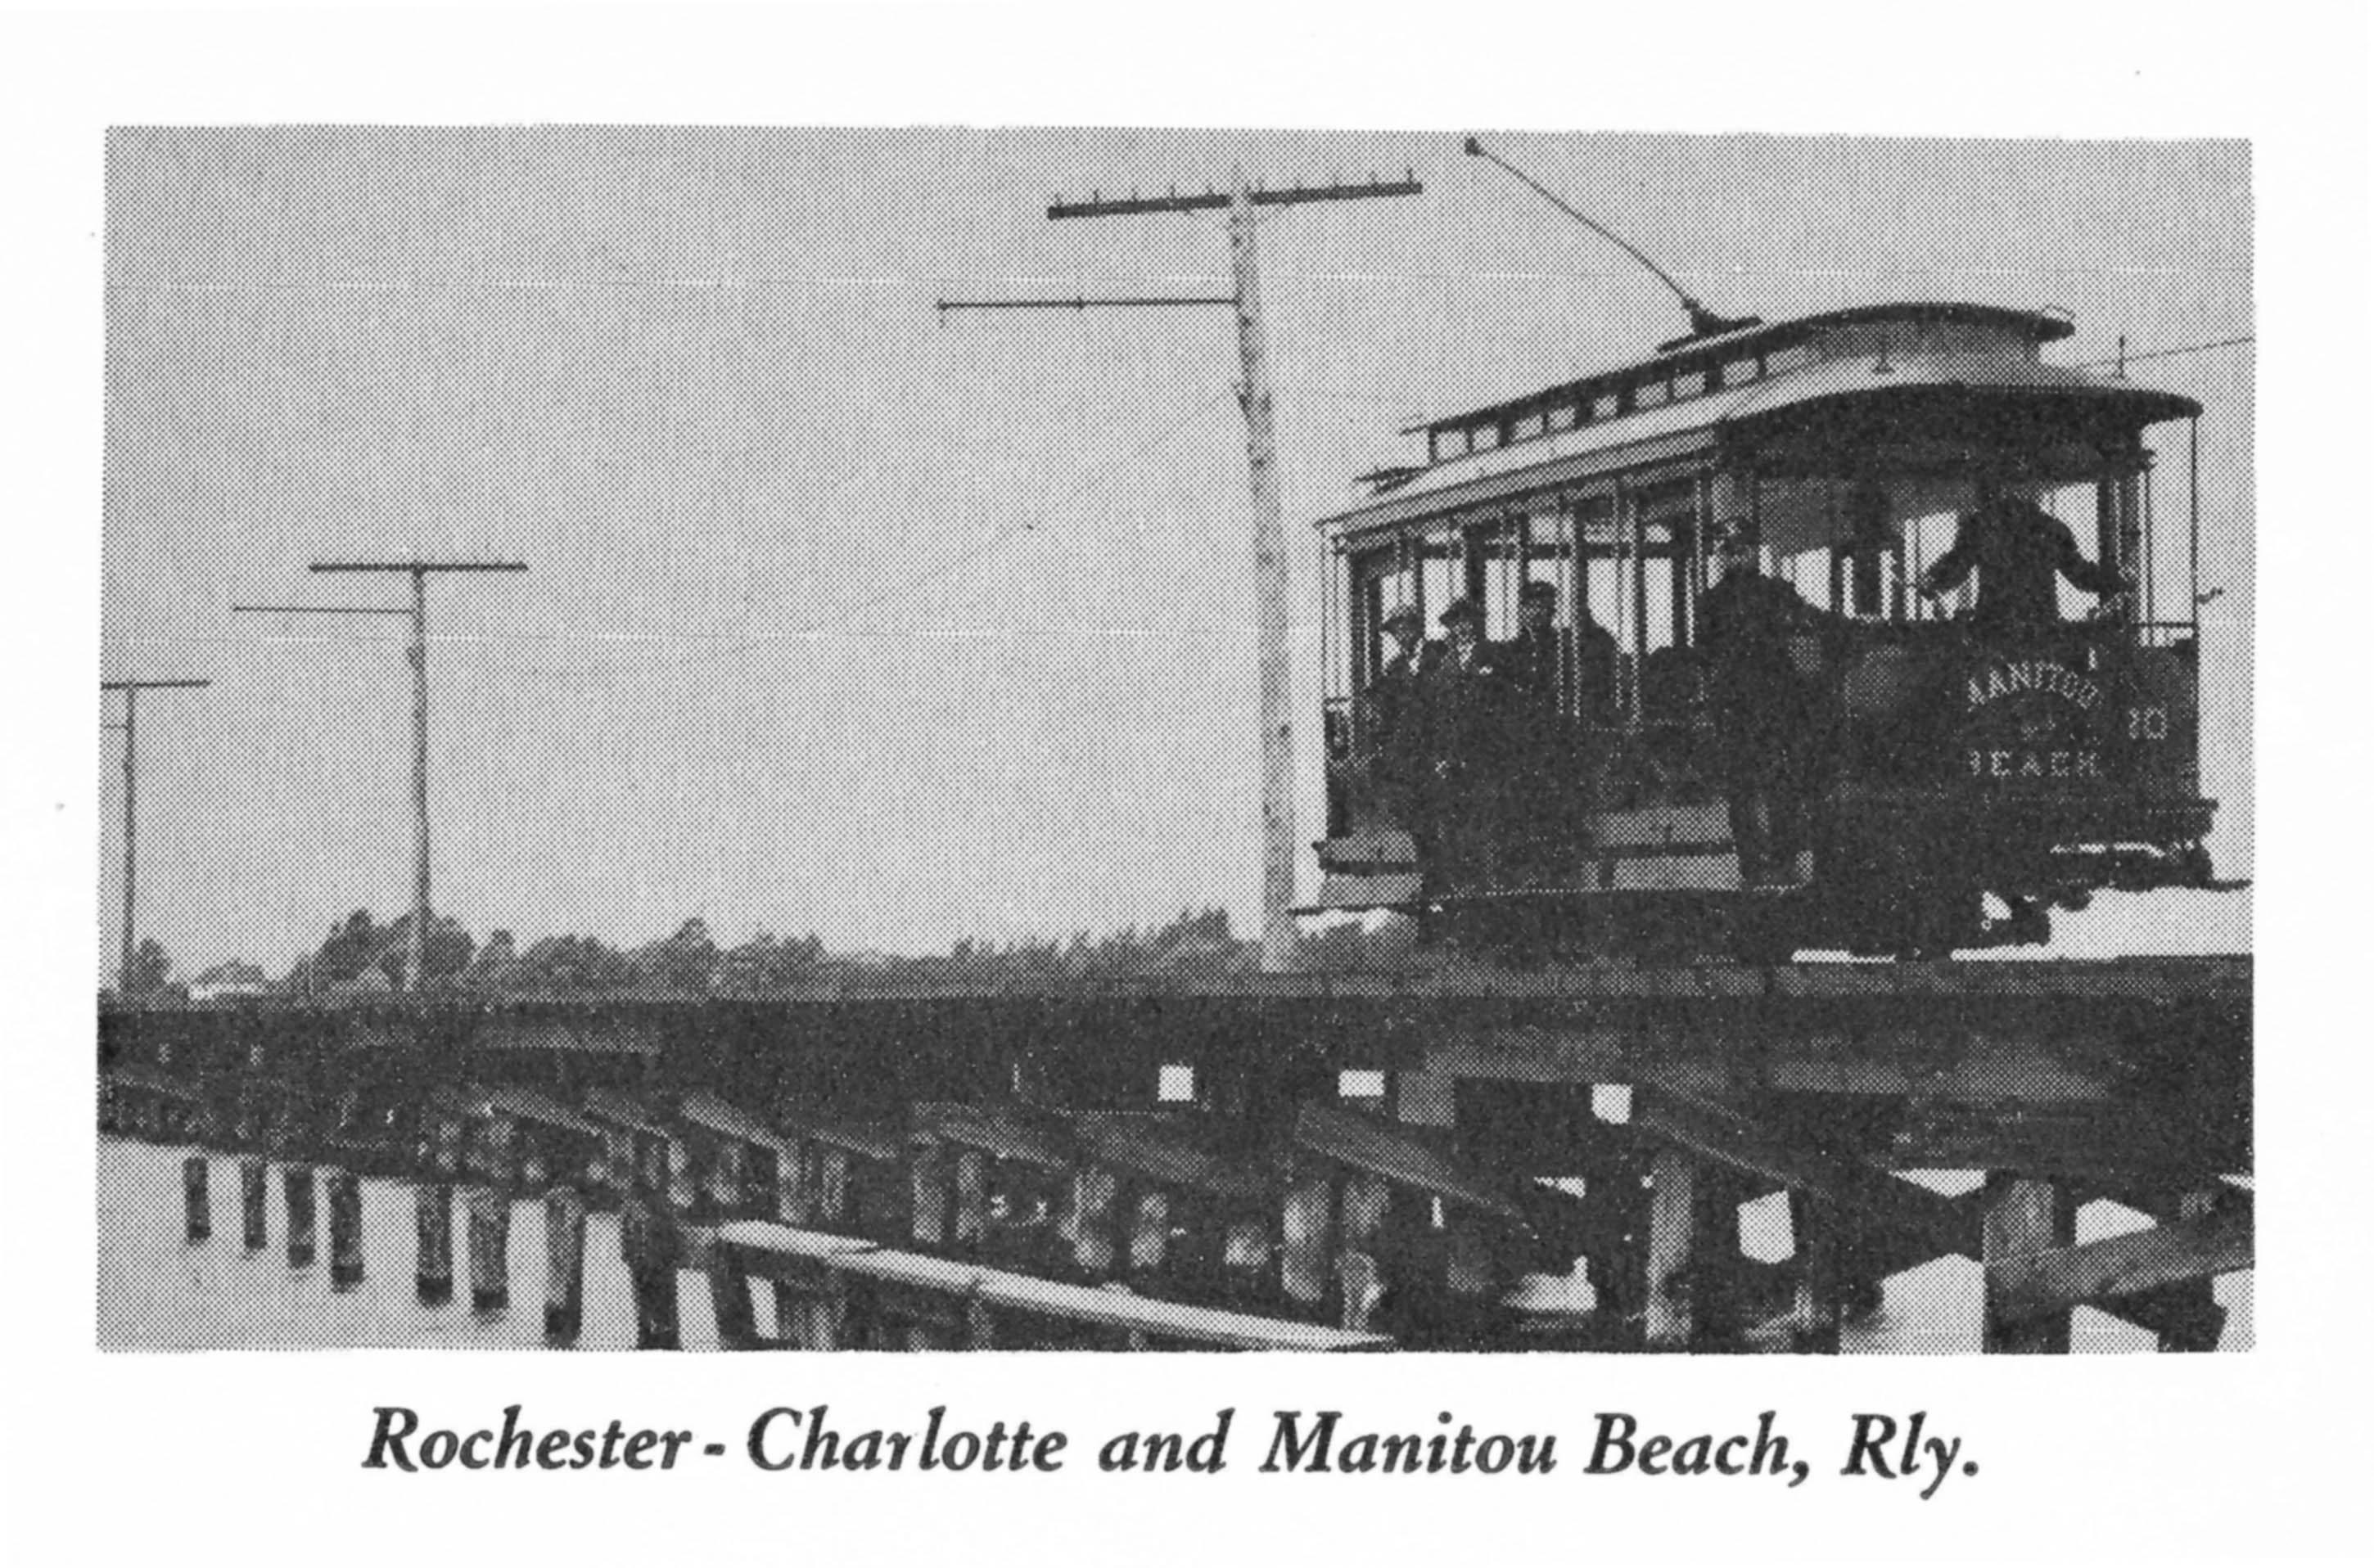 Charlotte and Manitou Beach Railway